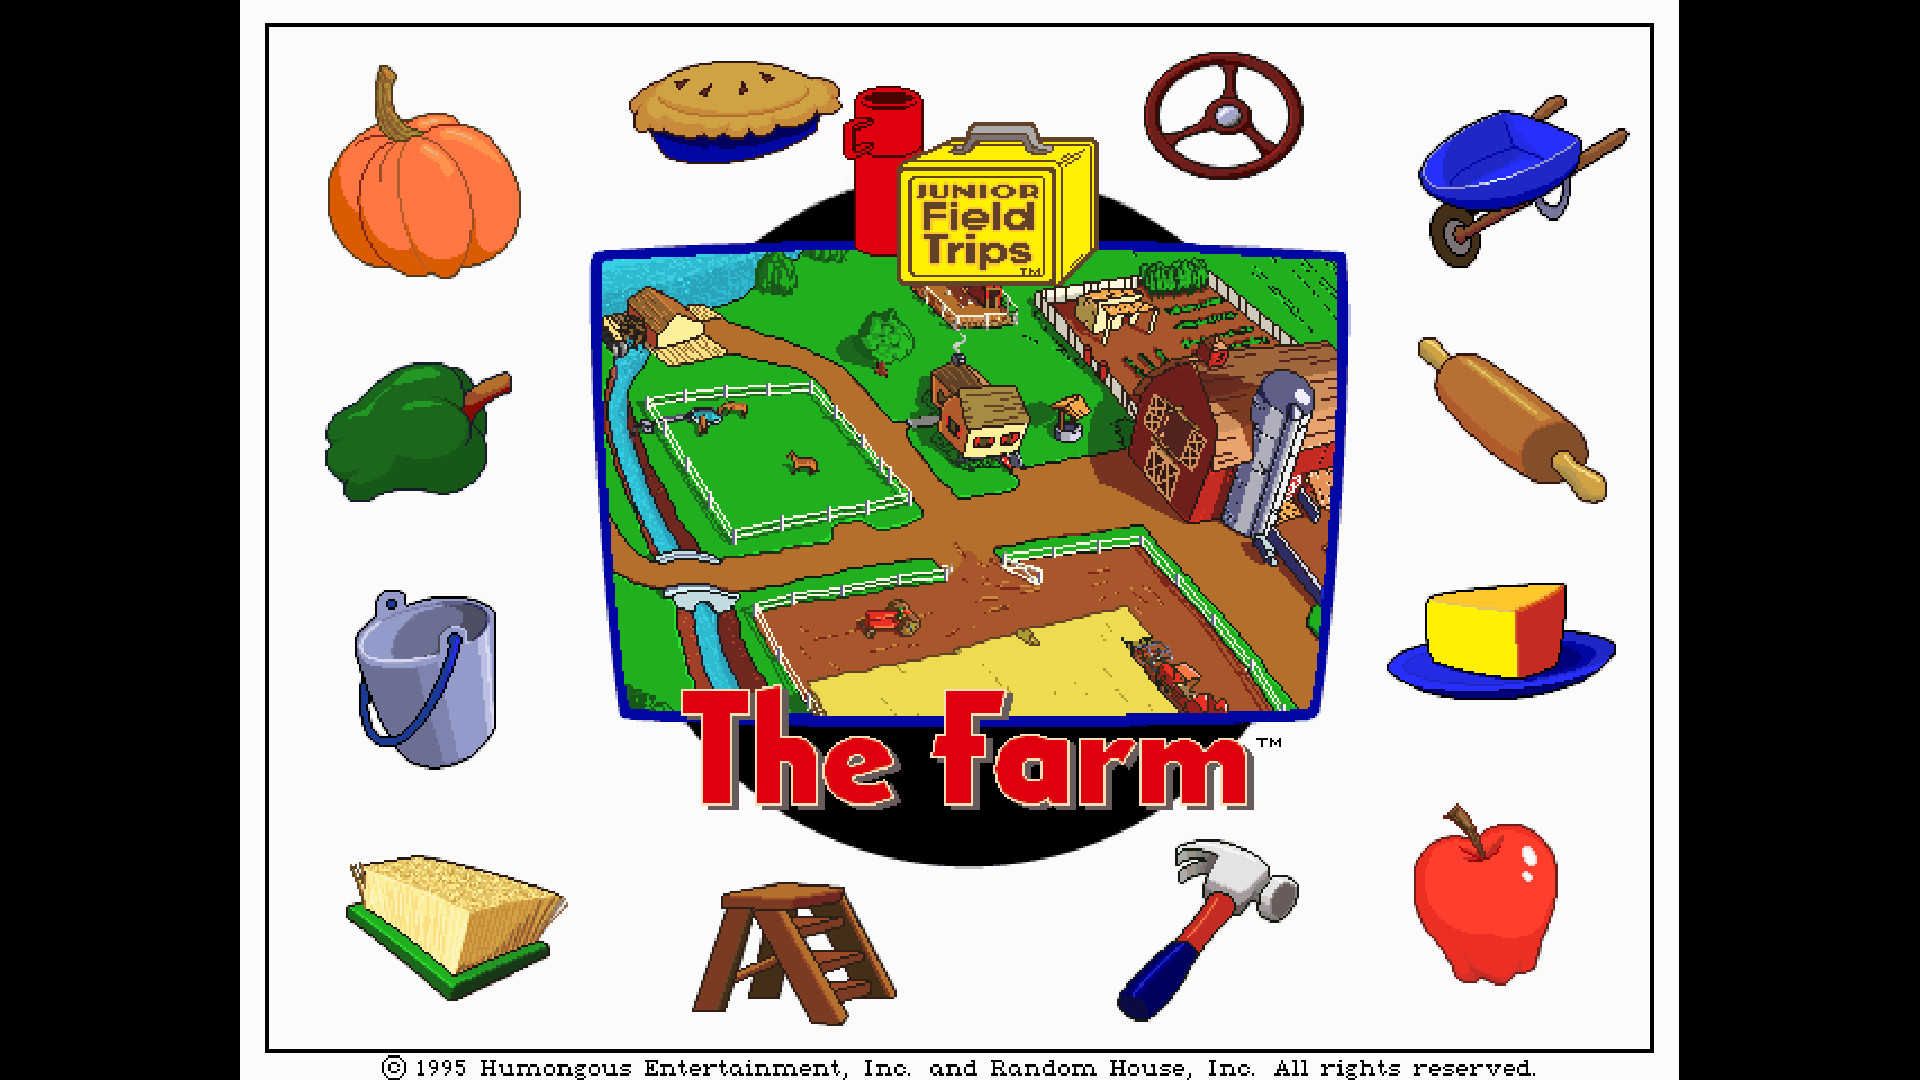 Let's Explore the Farm (Junior Field Trips) screenshot